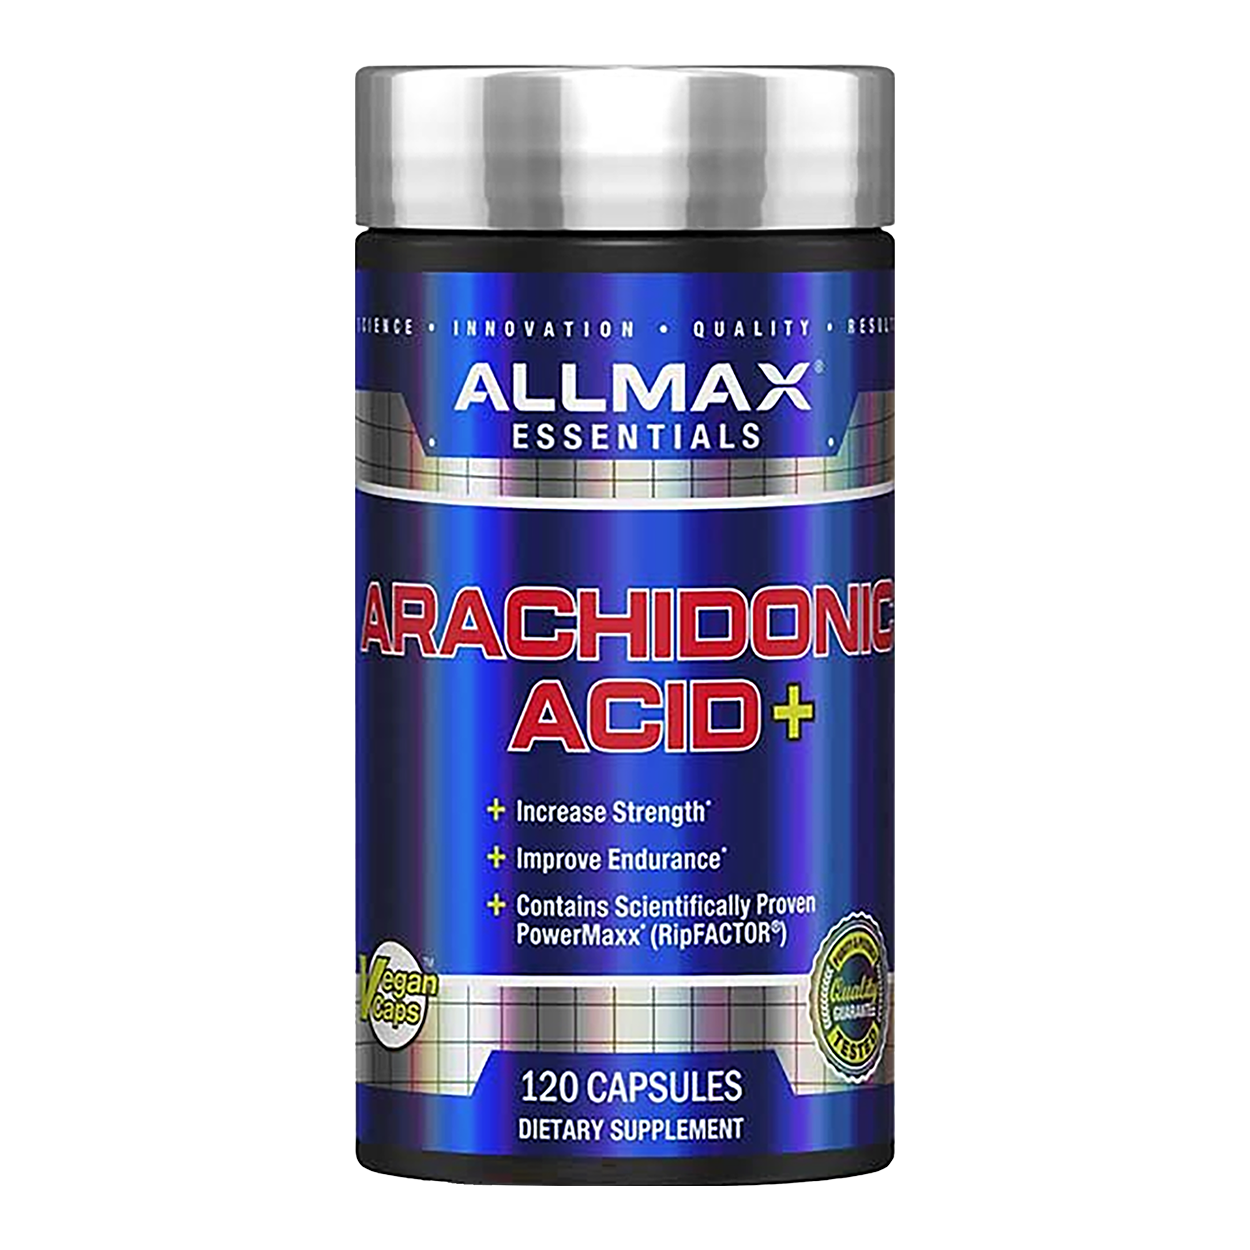 Allmax Nutrition Arachidonic Acid + front of the bottle